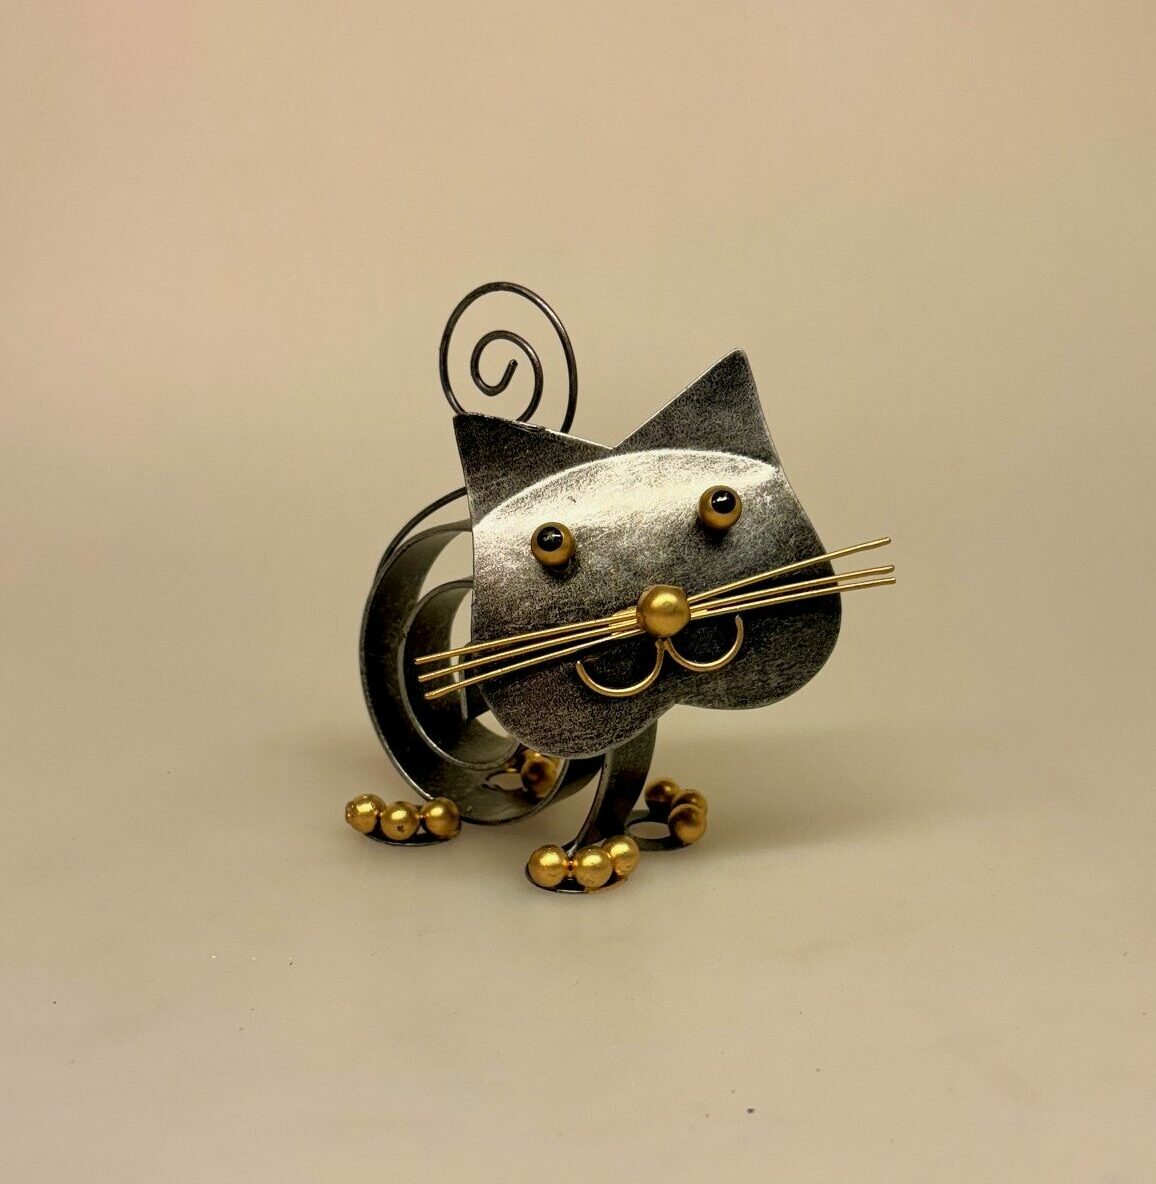 Metalfigur - Sort kat spiral, nelly, M74T, metalkat, kattefigur, kat, missekat, mis, sort kat, penge, pengegave, penge i gave, memo, noter, ting med katte, katteting, biti, ribe